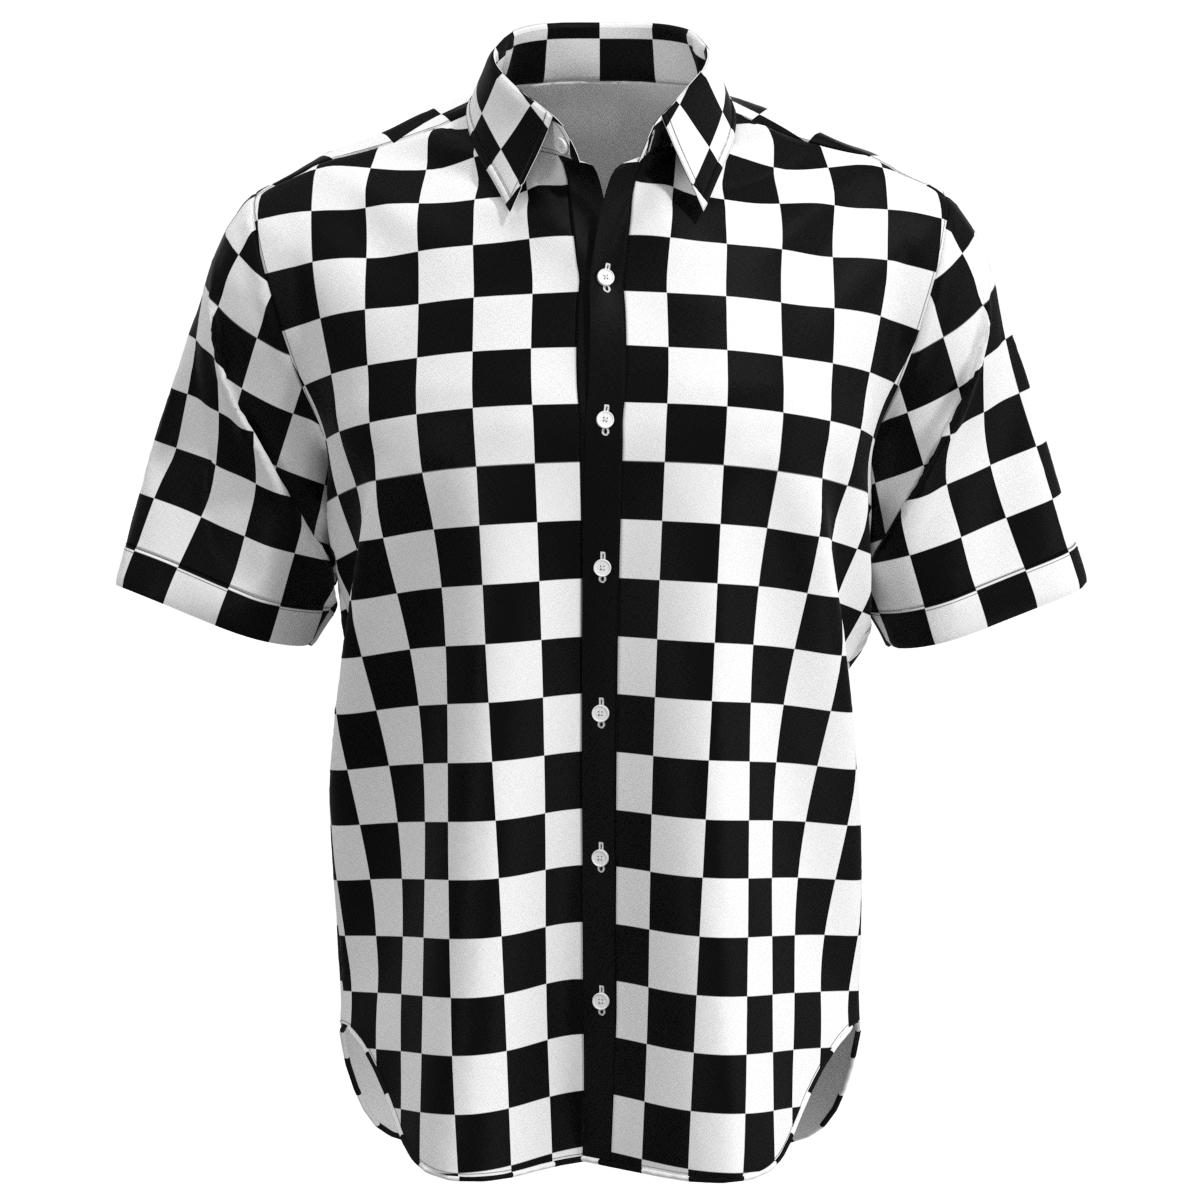 Top 100+ Black and white checkered shirt - sosfashion75.com